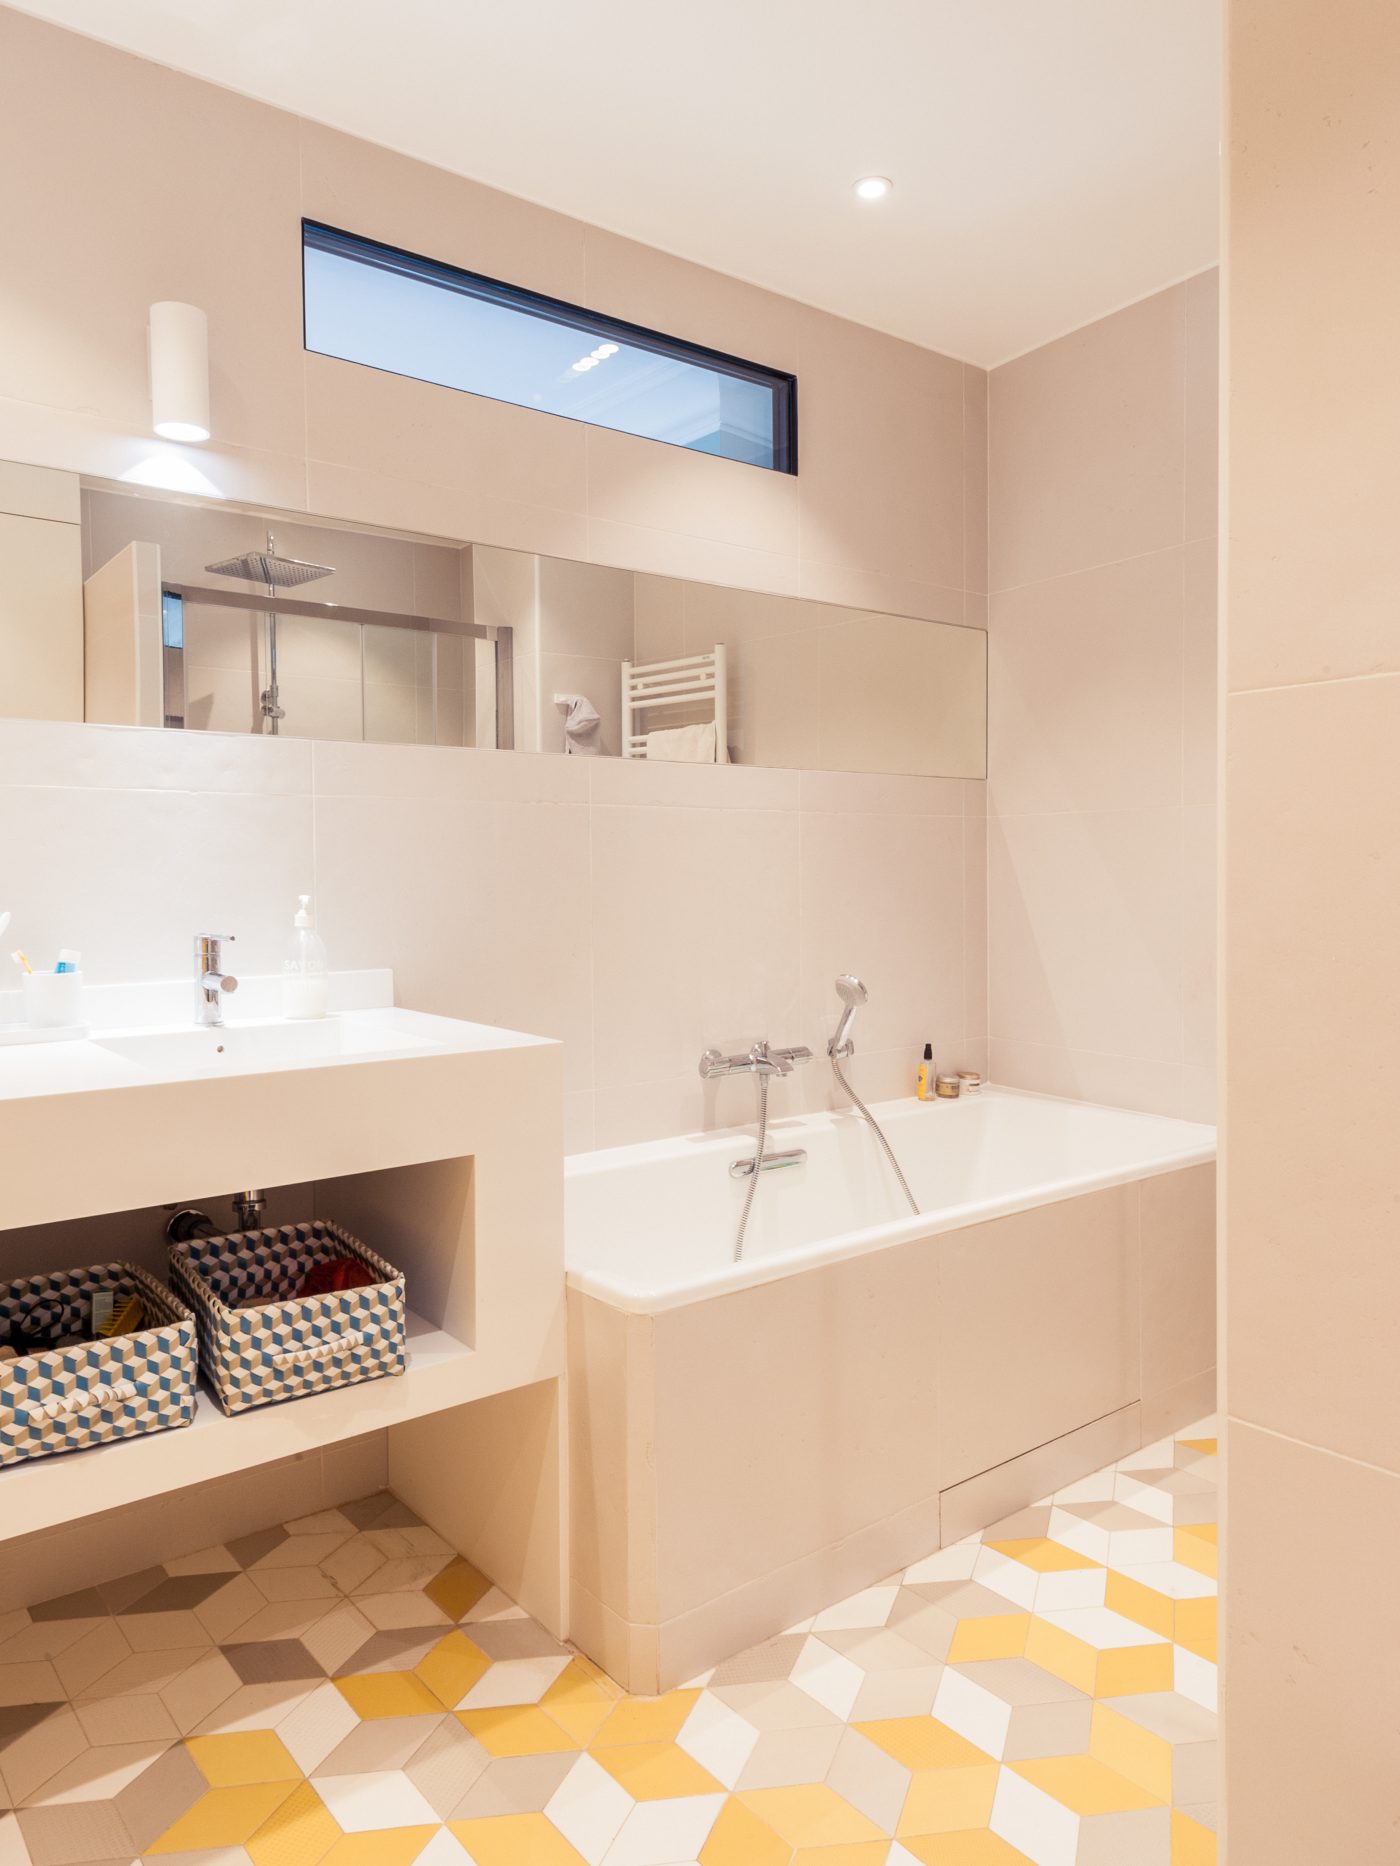 Moderne badkamer in grijs, wit en geel